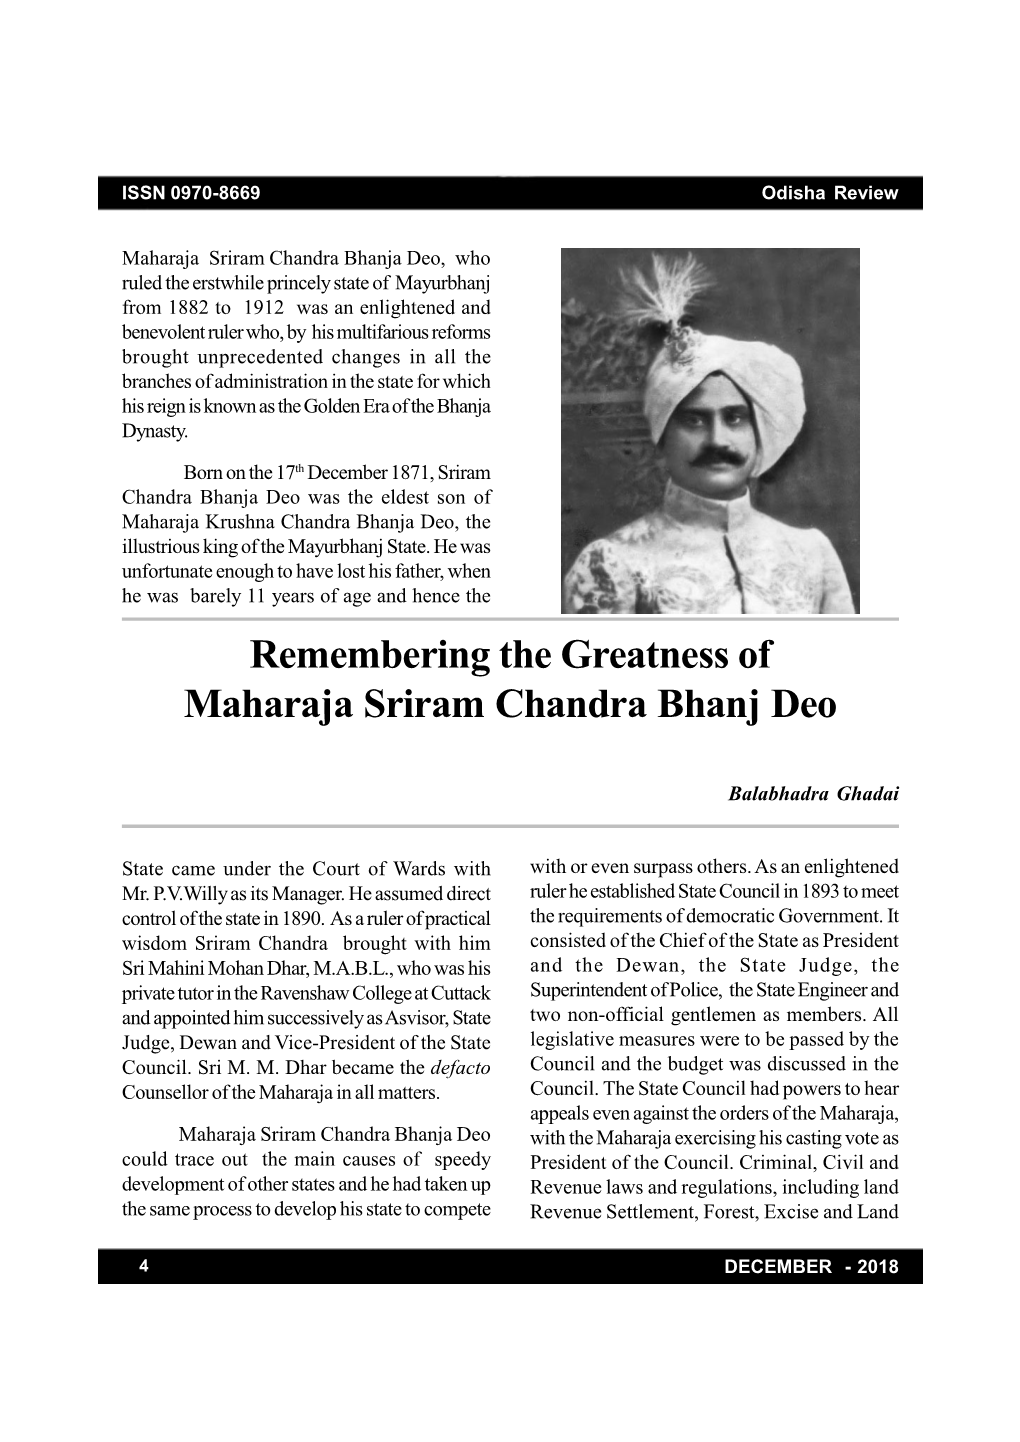 Remembering the Greatness of Maharaja Sriram Chandra Bhanj Deo